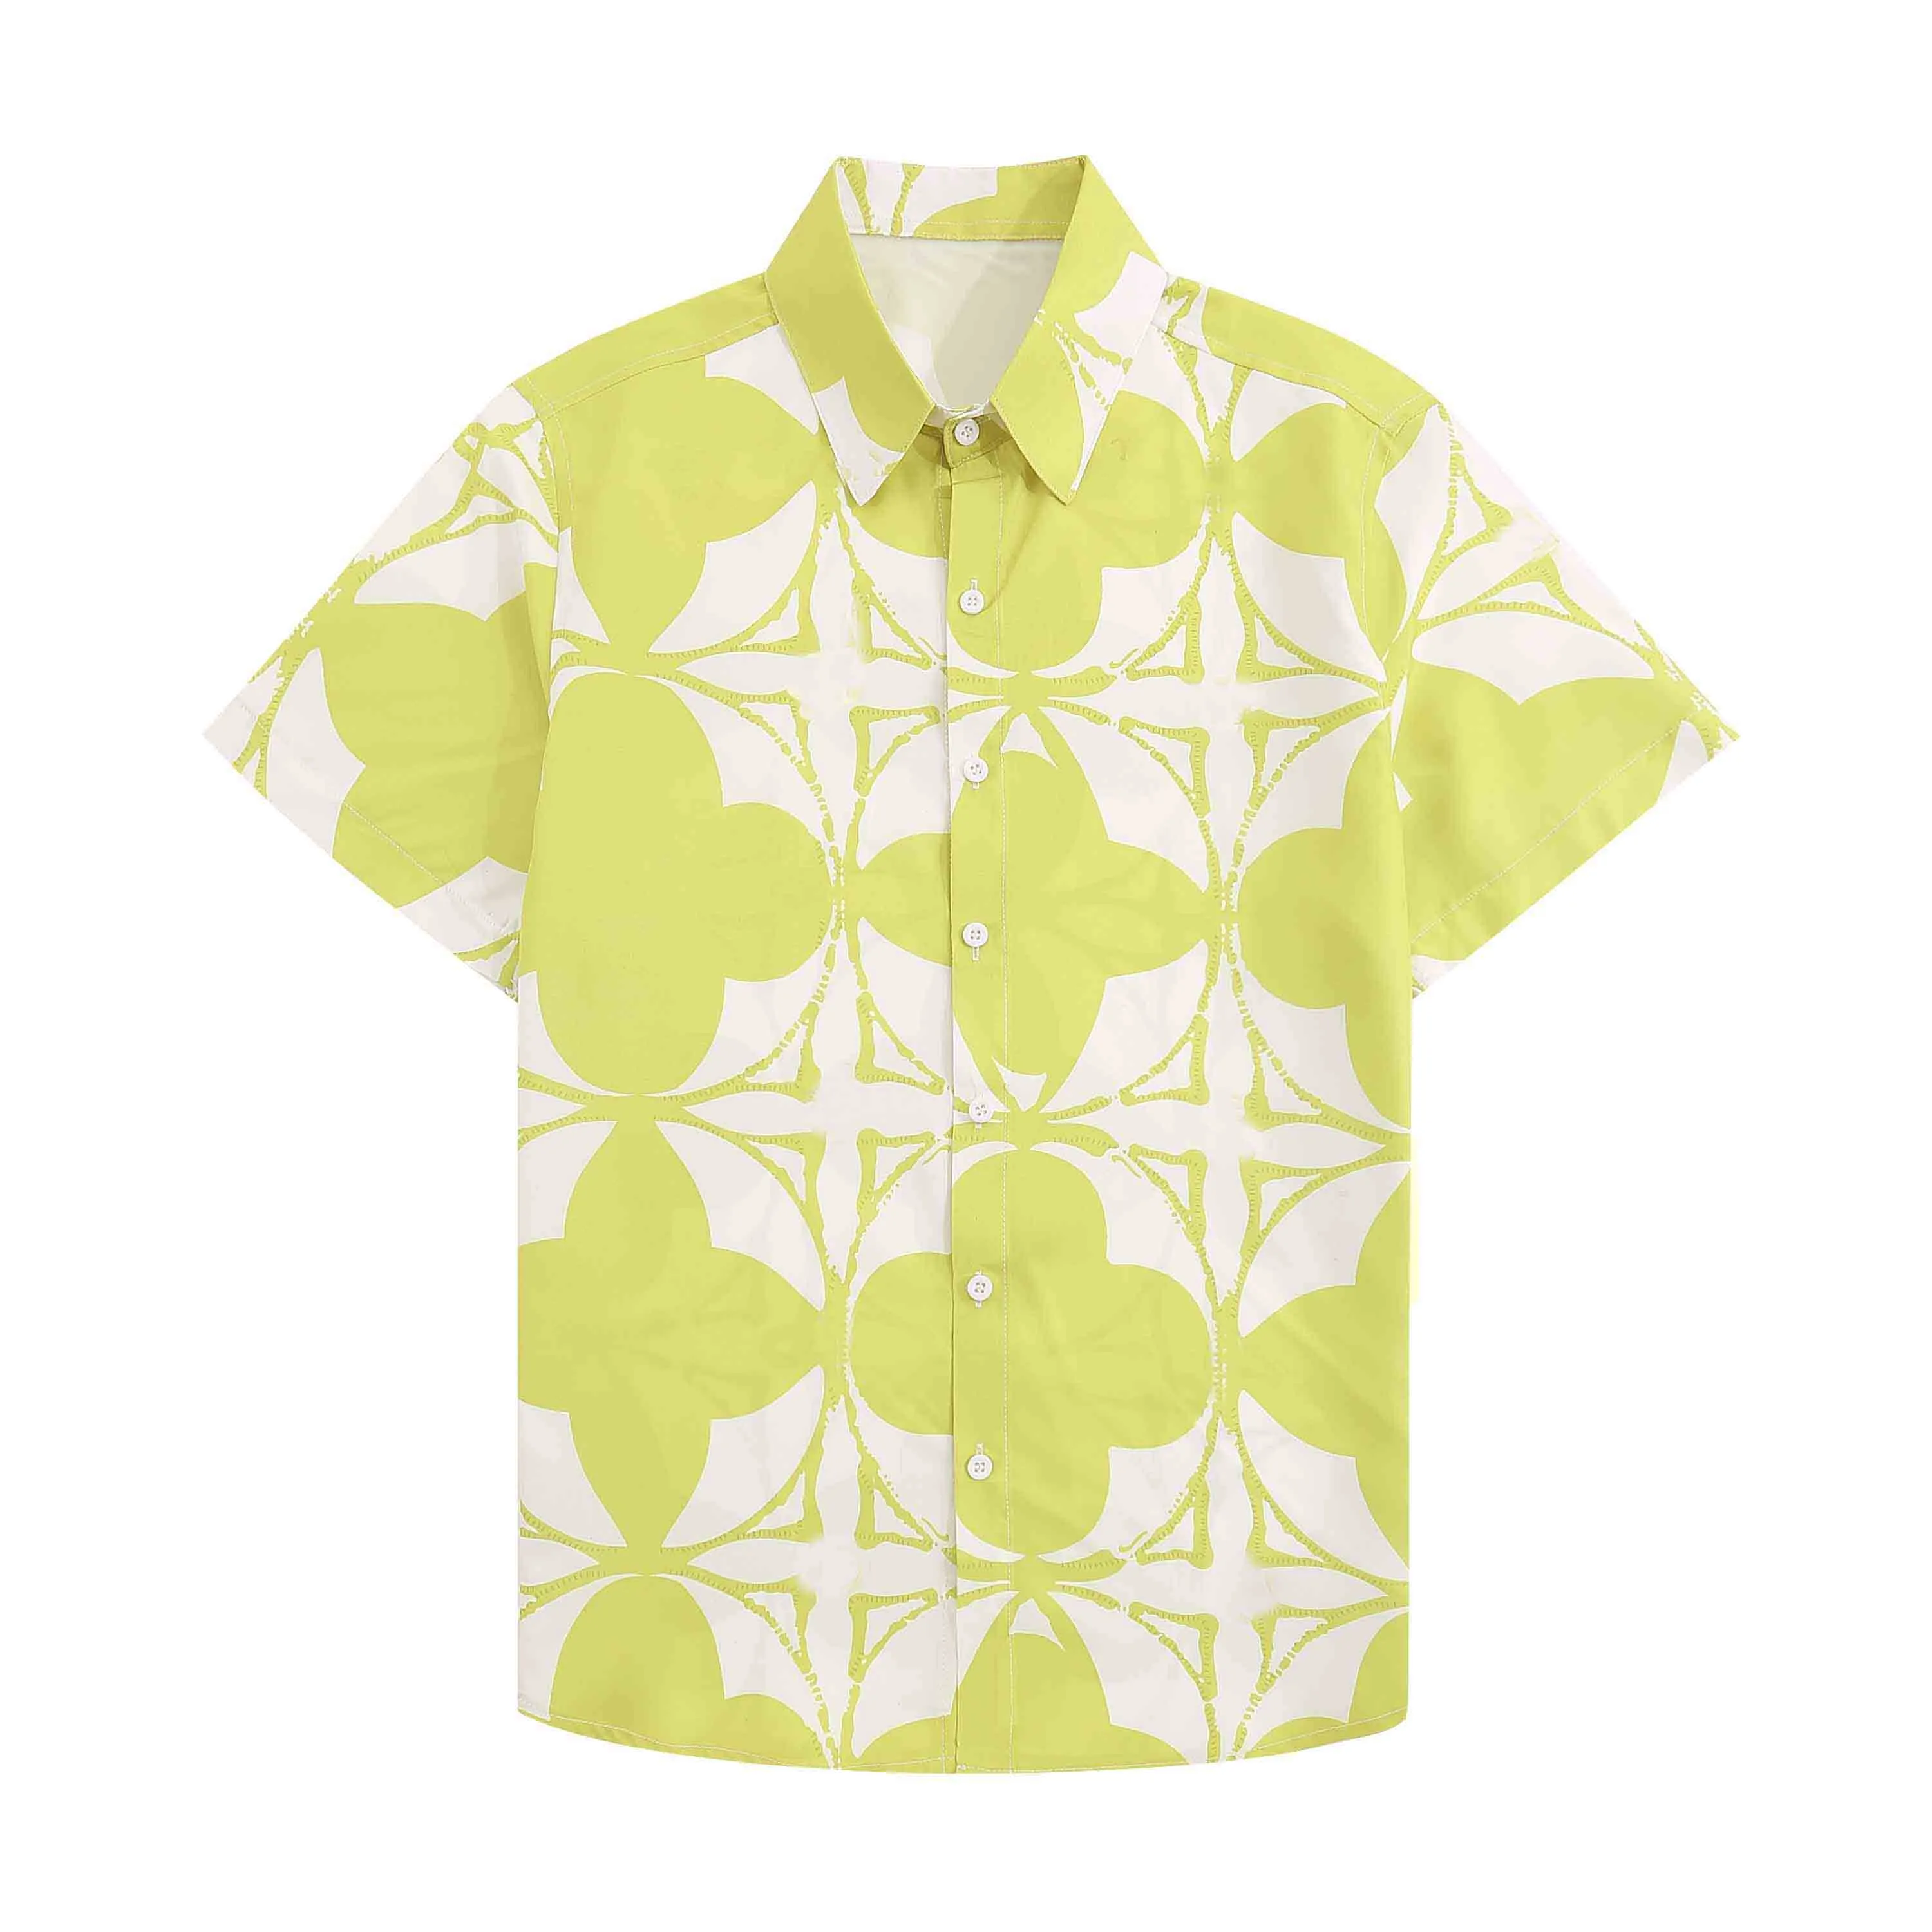 Camicie casual da uomo Maschile Top Sea Boat Coconut Tree Print Soft Menswear Beach Vacation Shirt Dating Wear